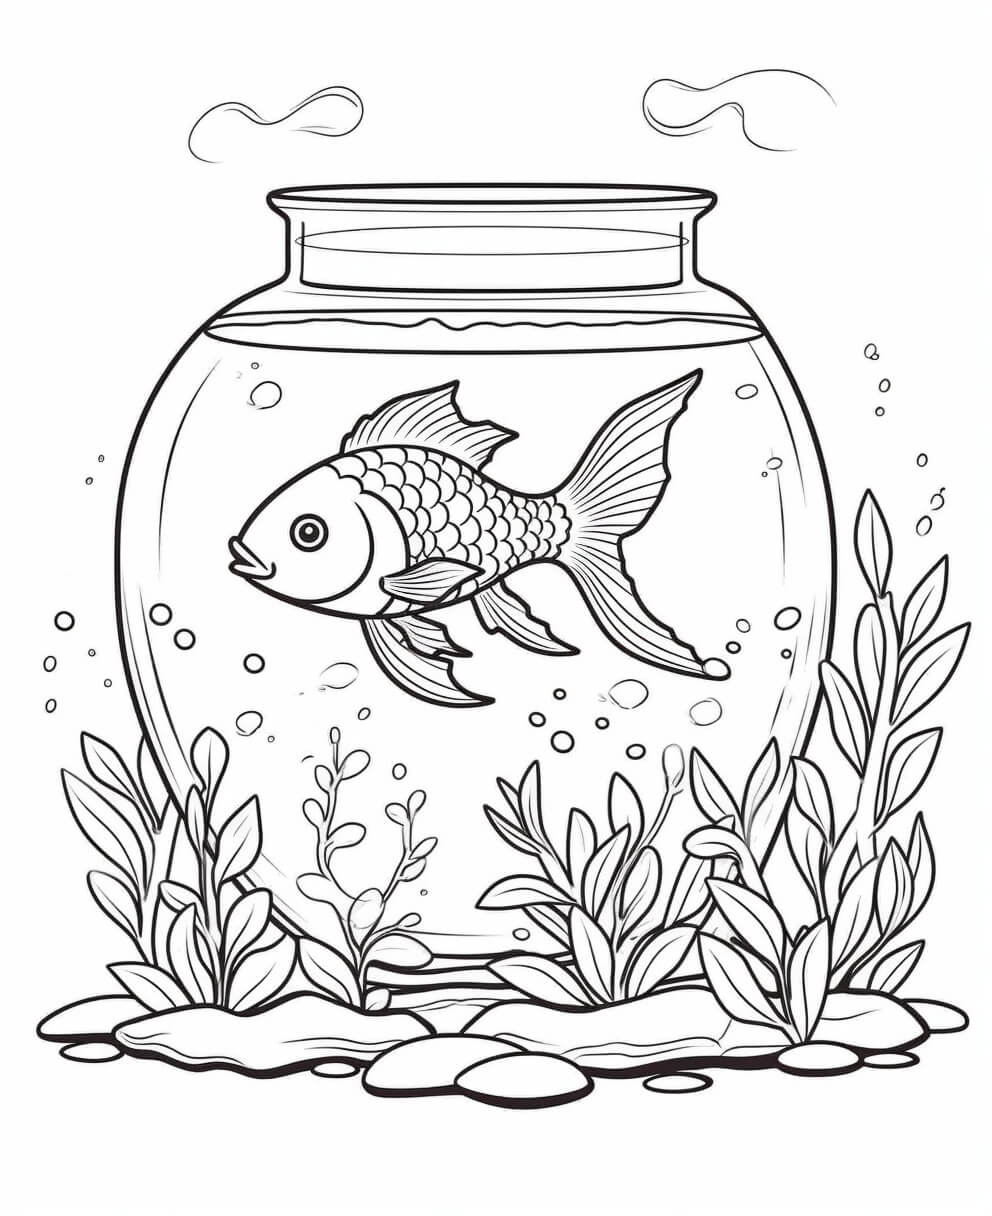 Aquarium coloring sheet (free + printable)